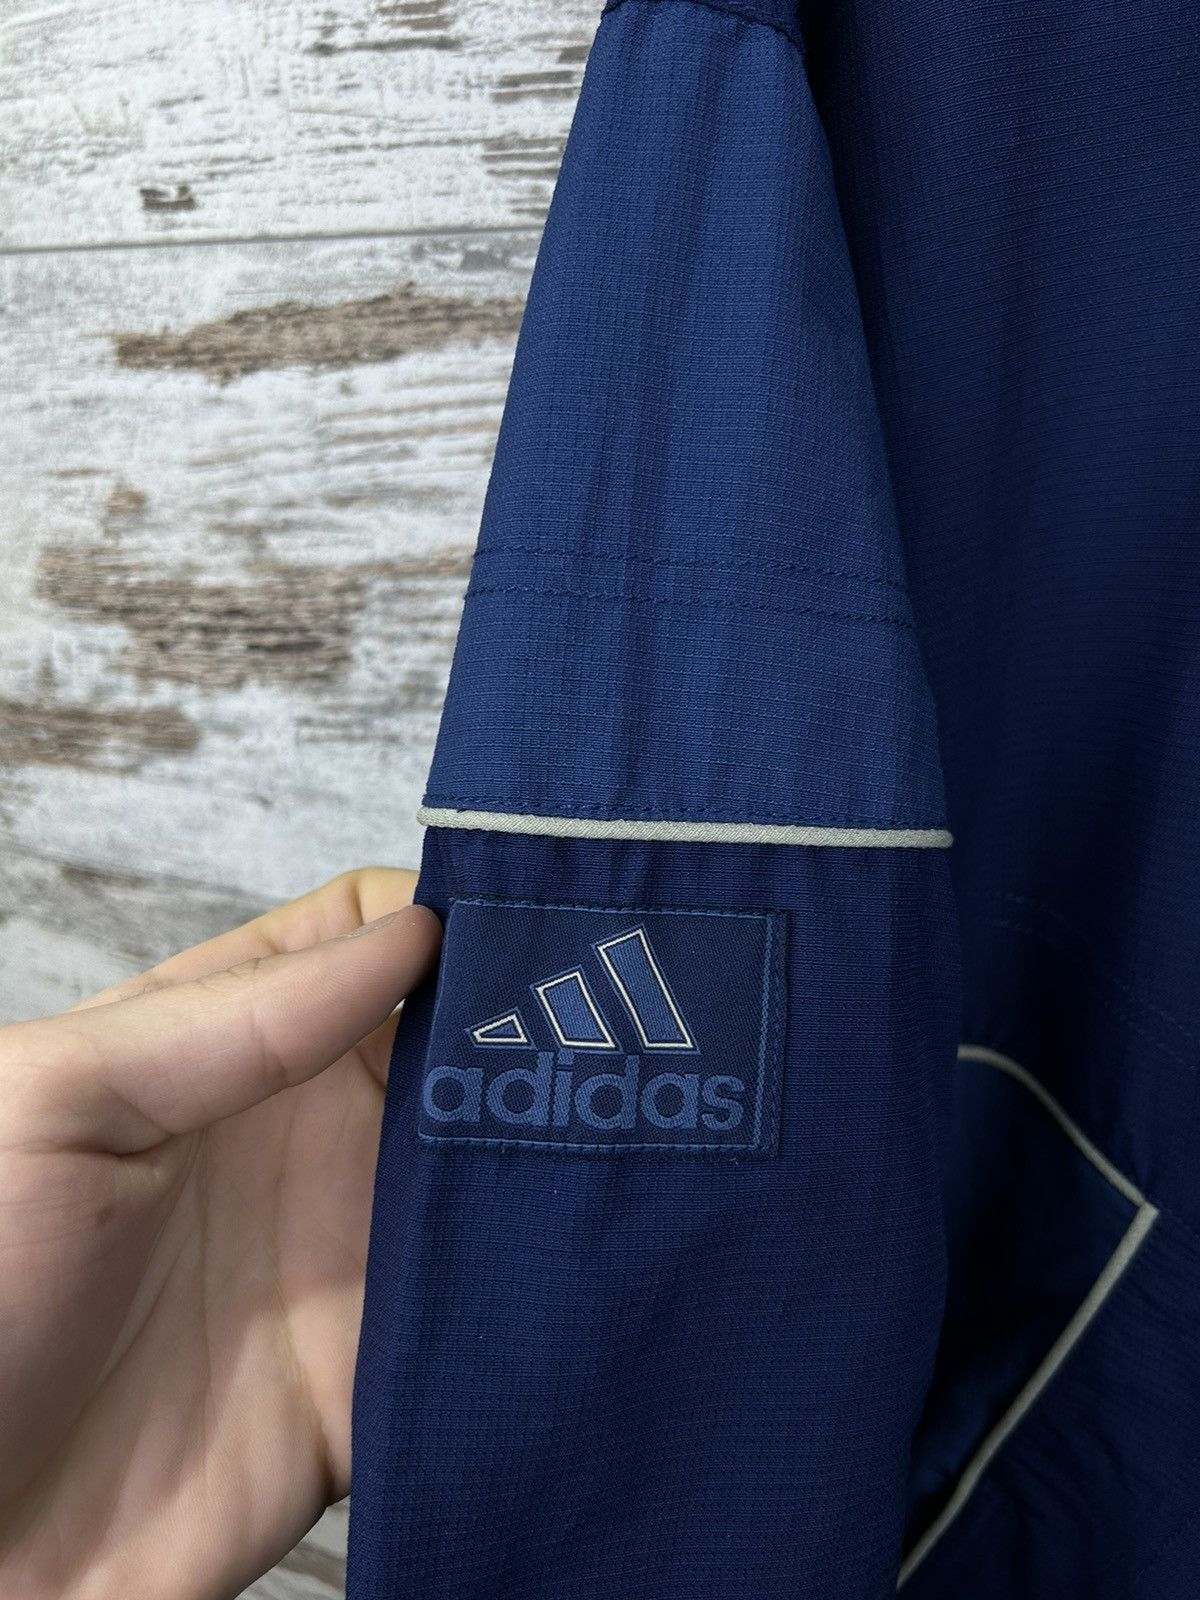 Adidas Mens Vintage Adidas Stripes Olympic track jacket y2k rare Size US M / EU 48-50 / 2 - 7 Thumbnail